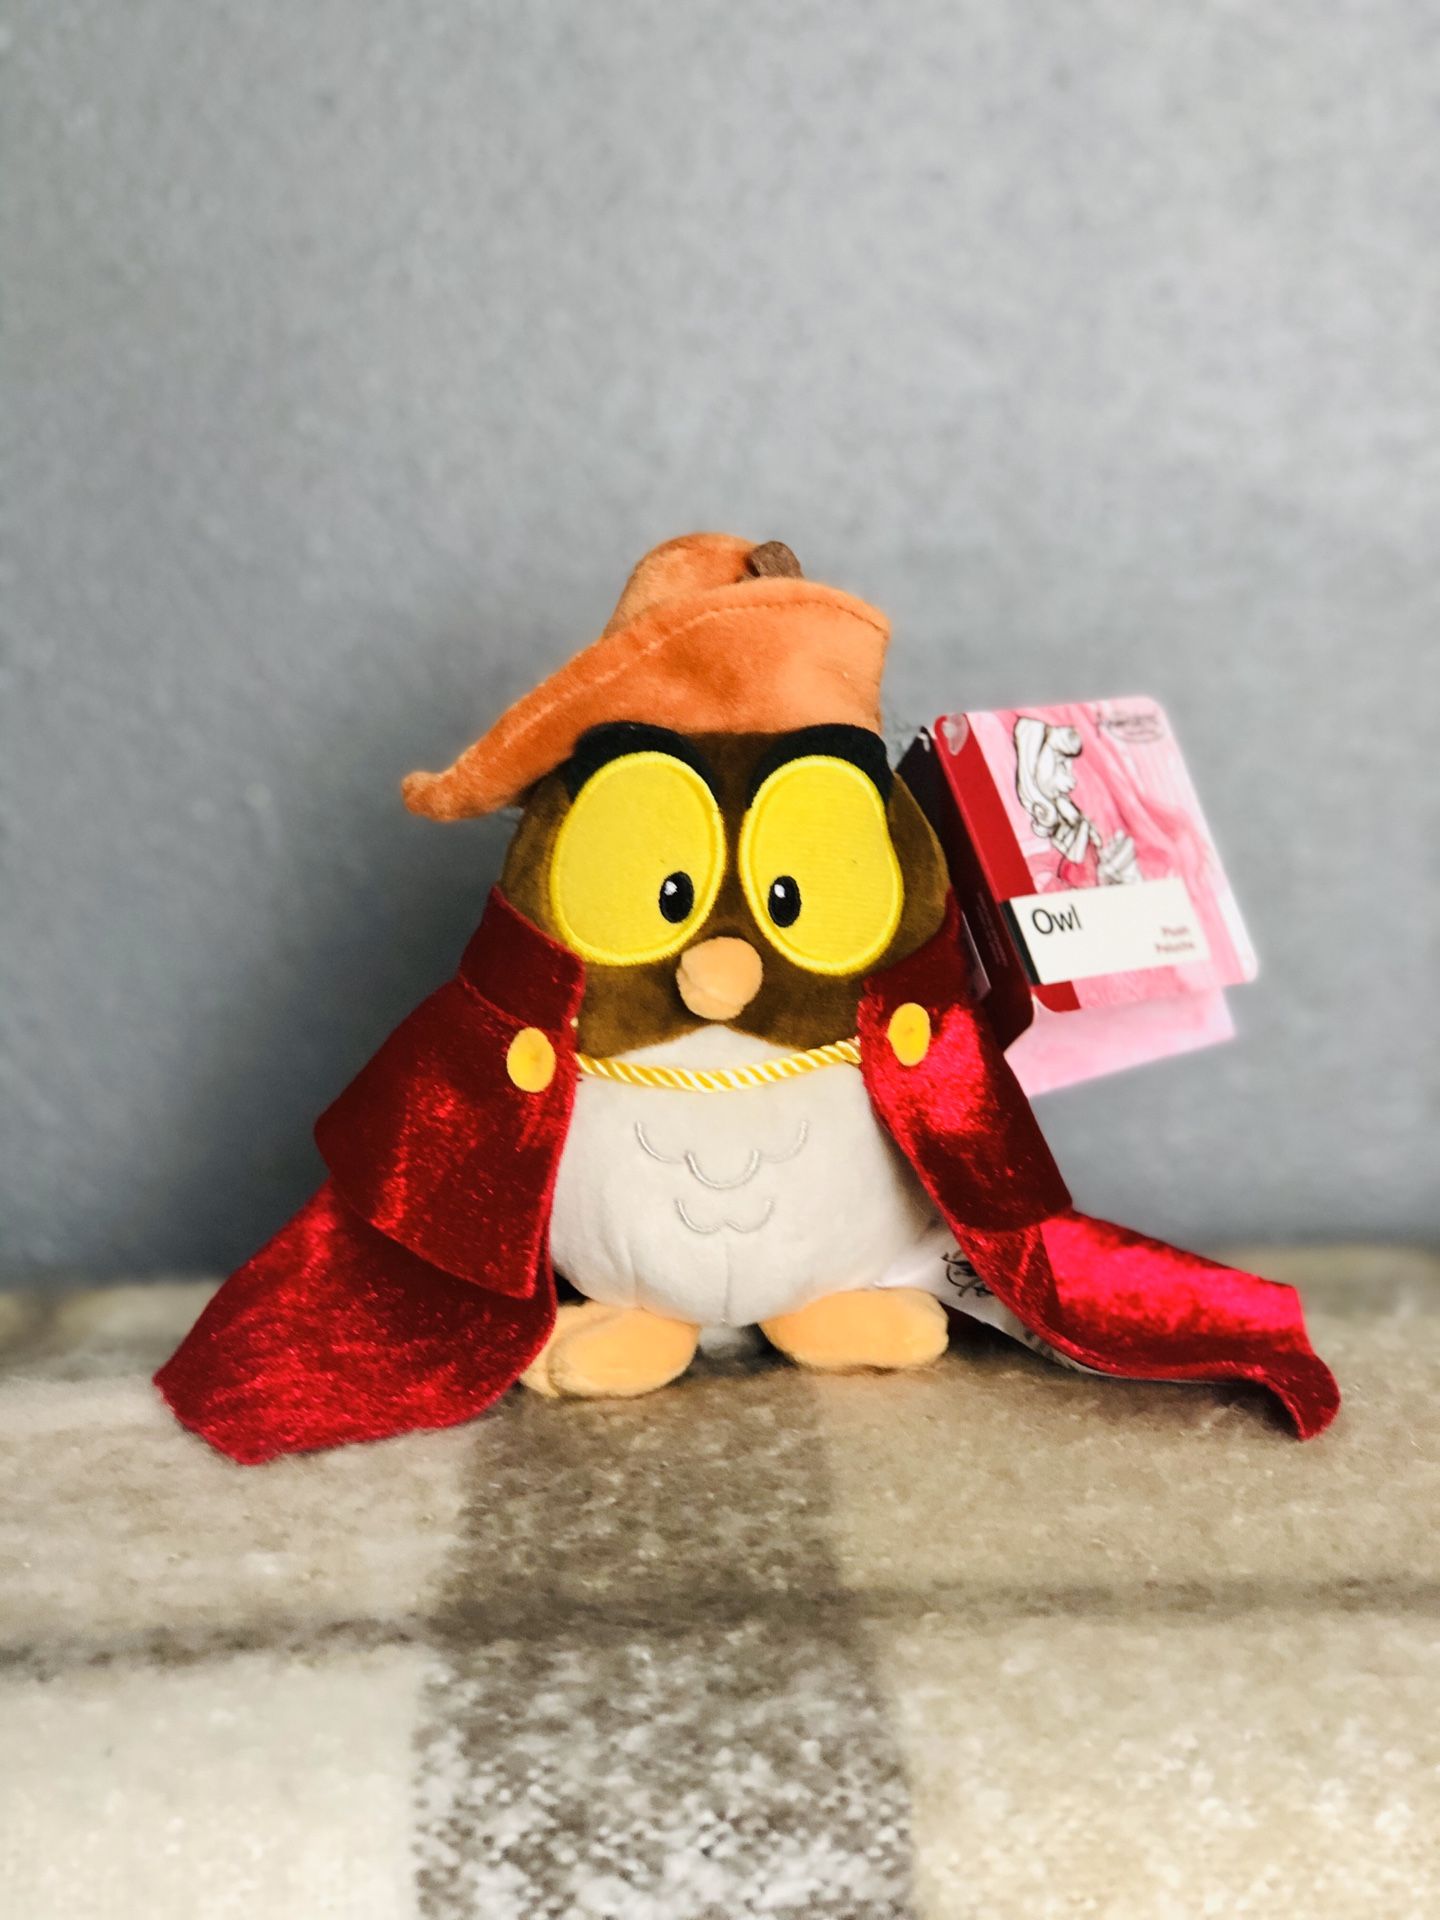 Disney small owl plush stuffed animal